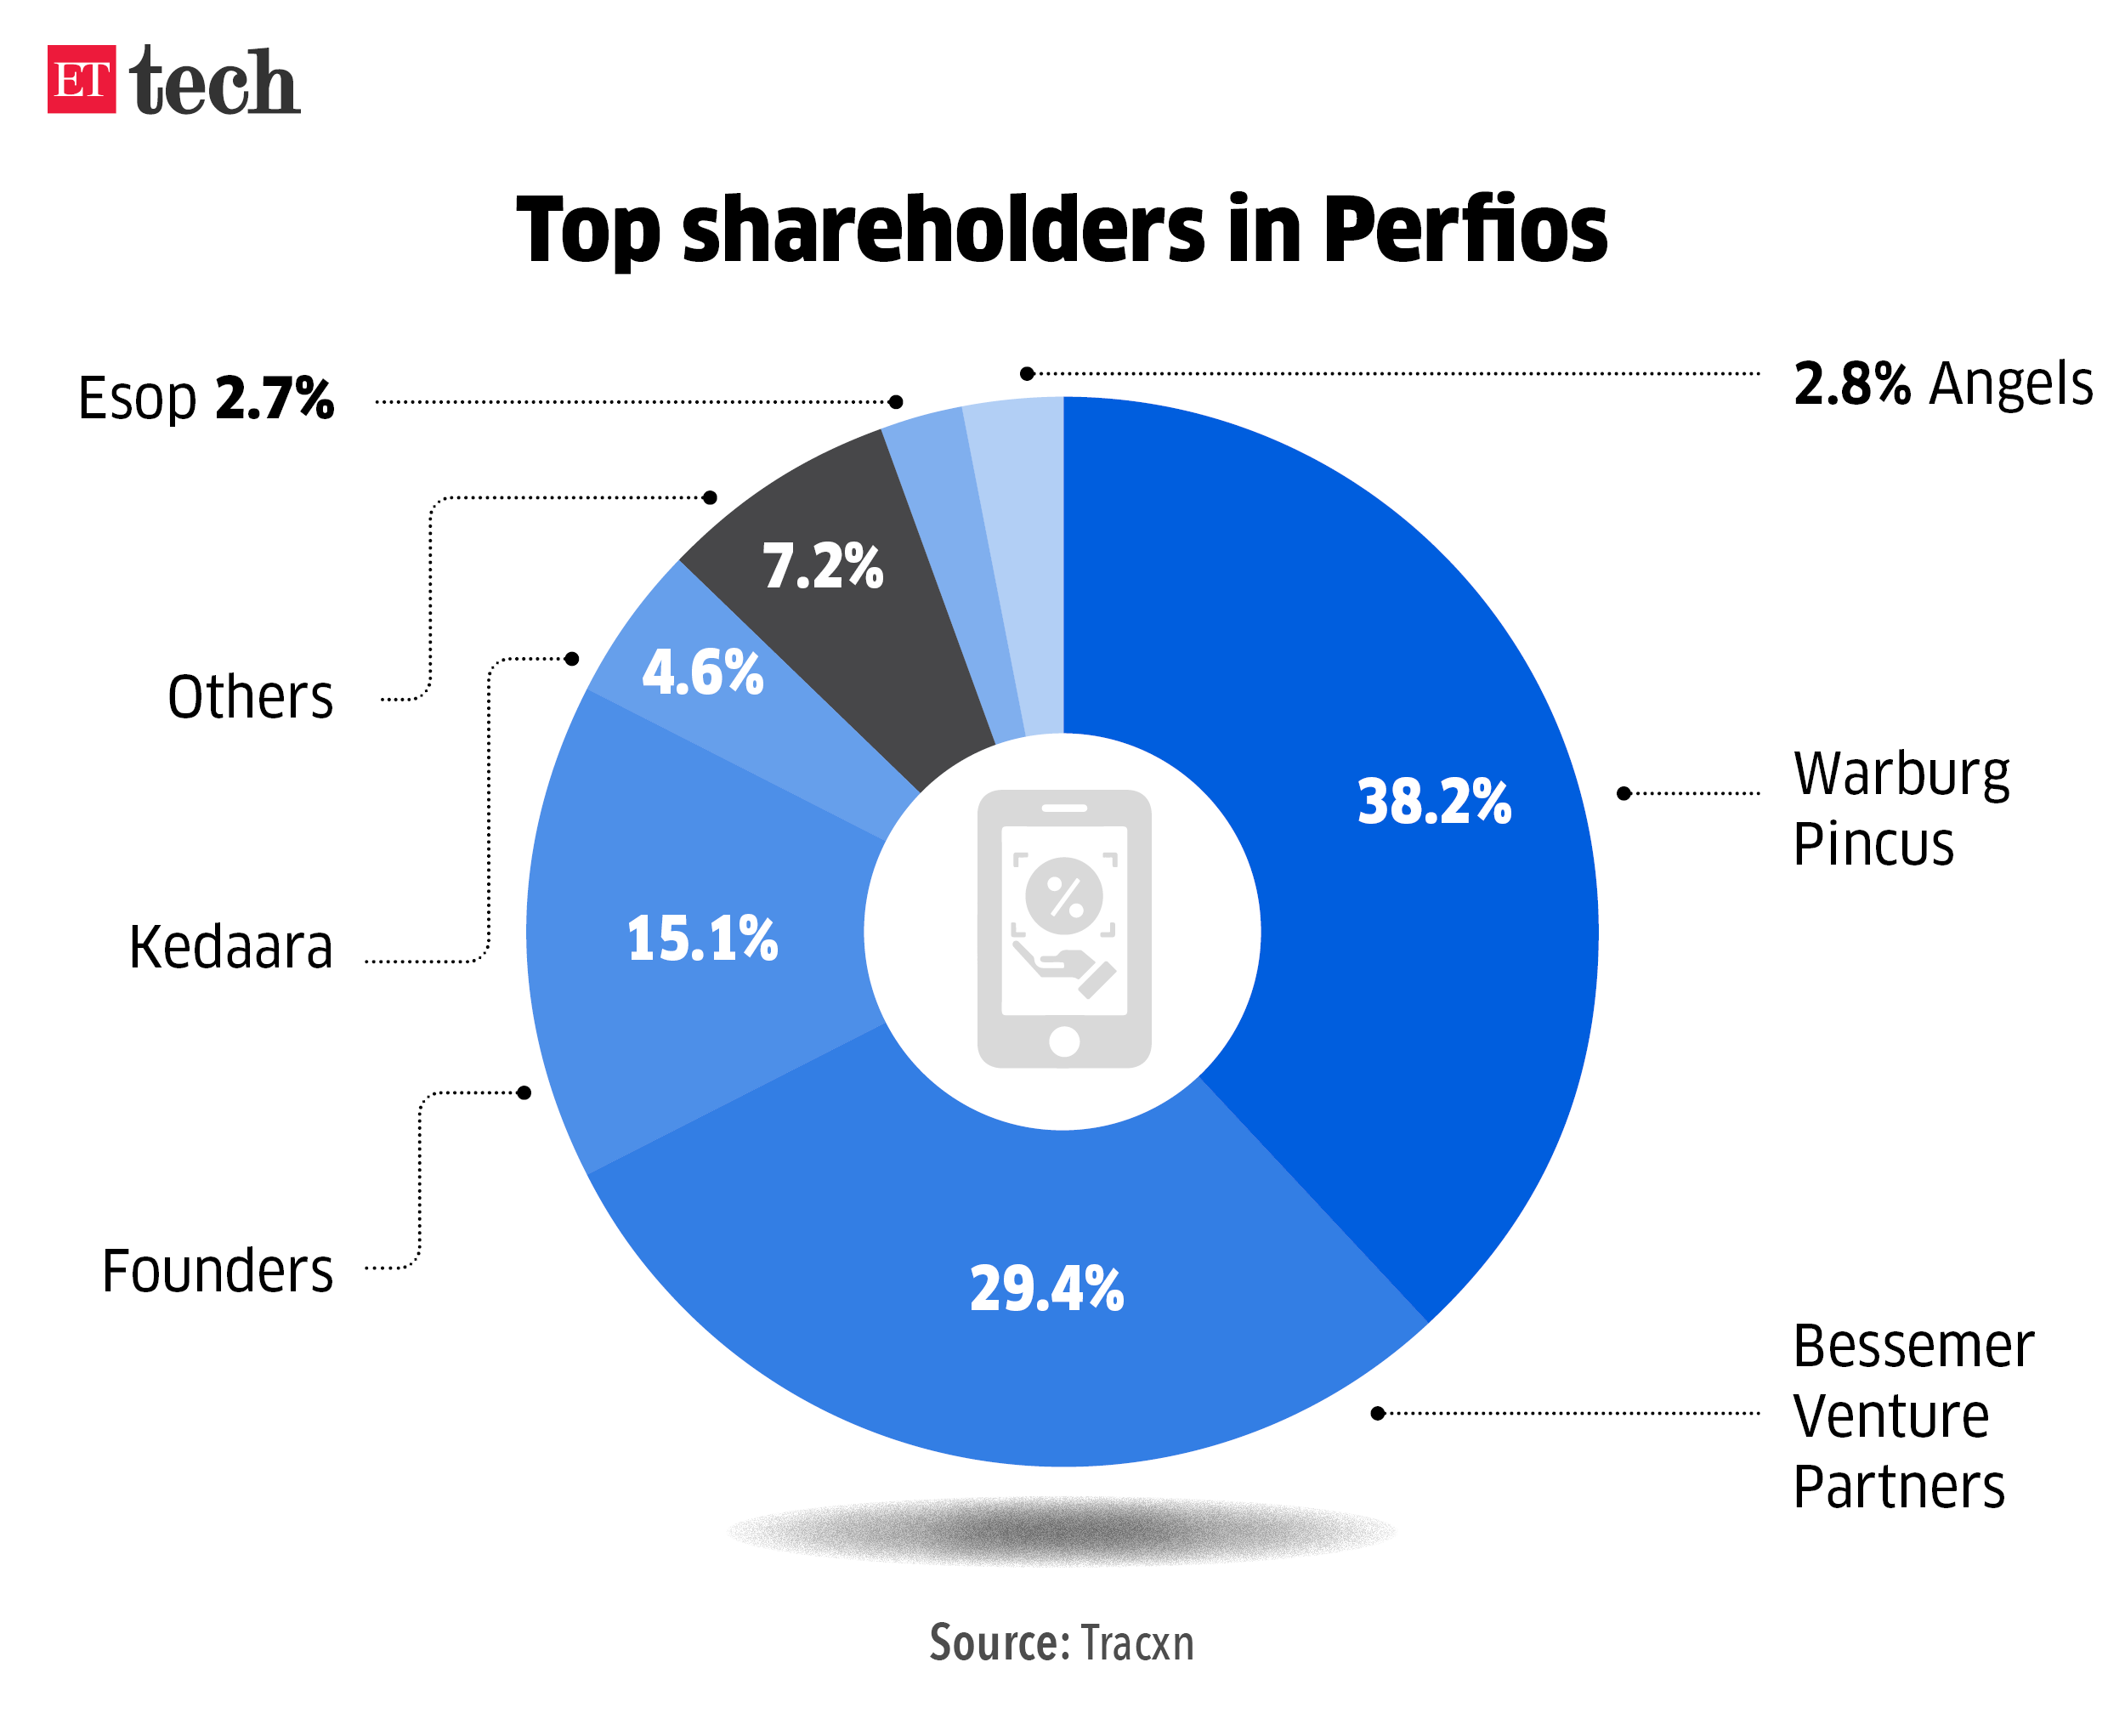 Top shareholders in Perfios